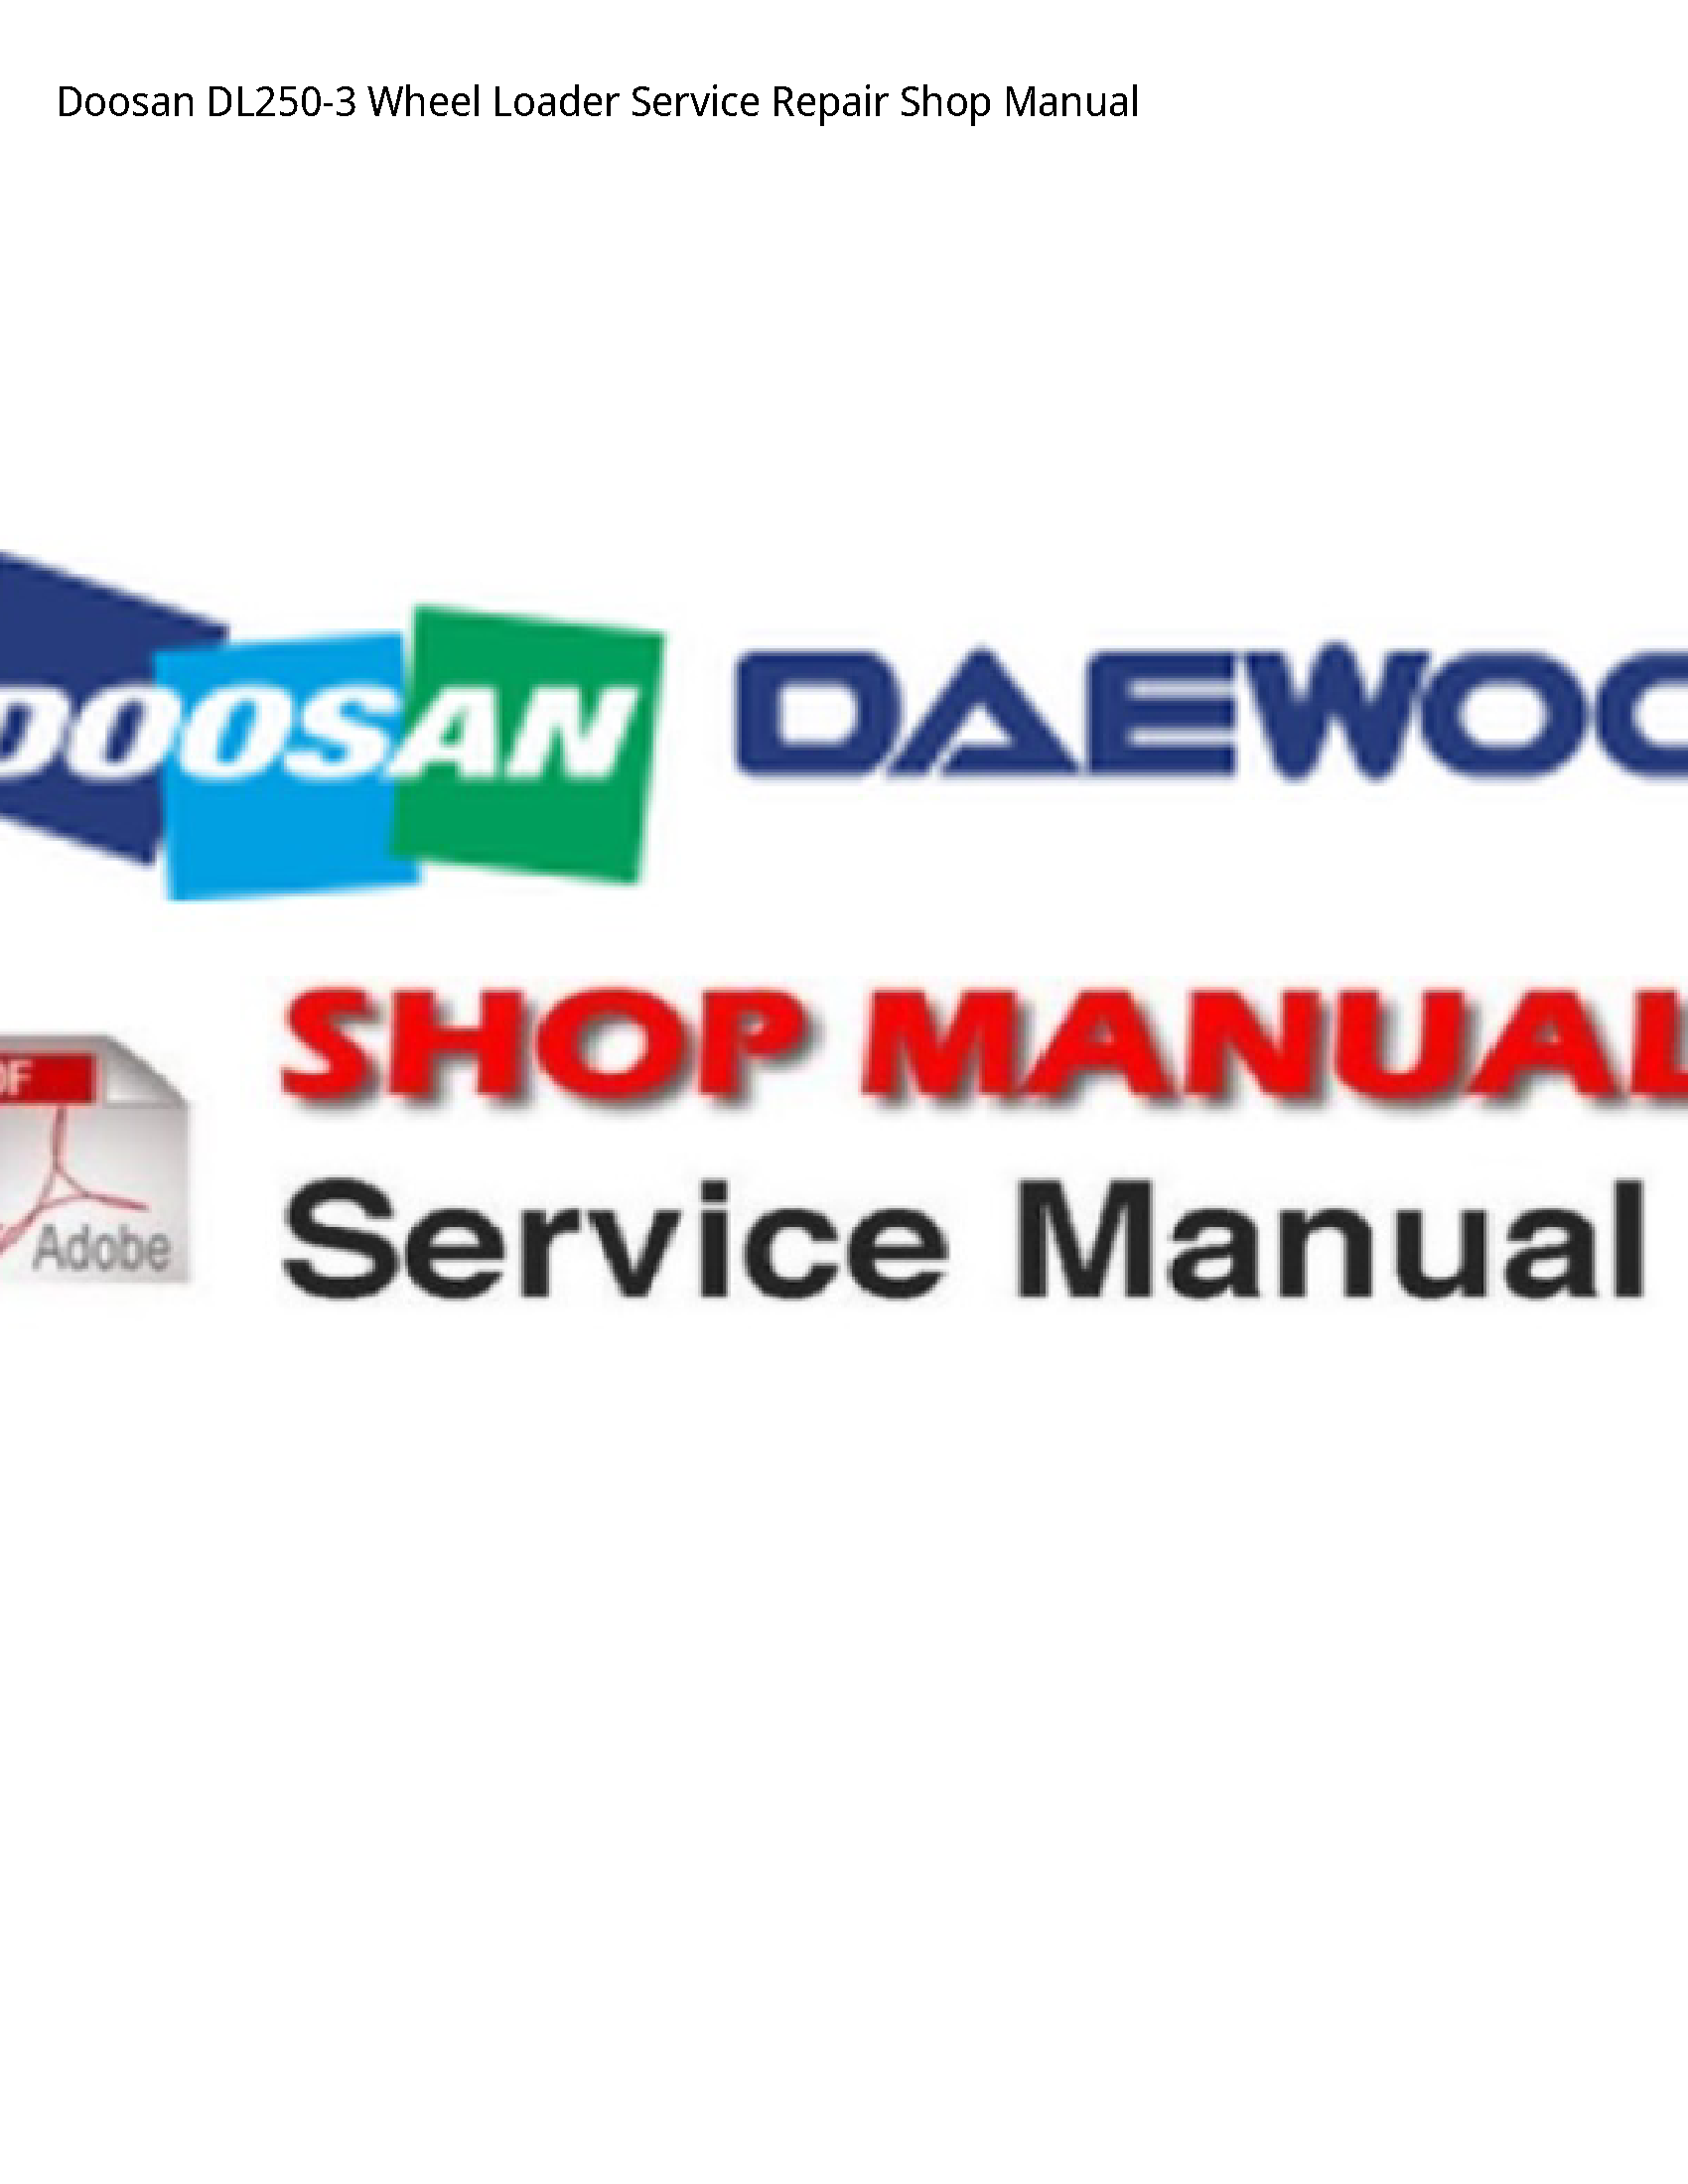 Doosan DL250-3 Wheel Loader manual